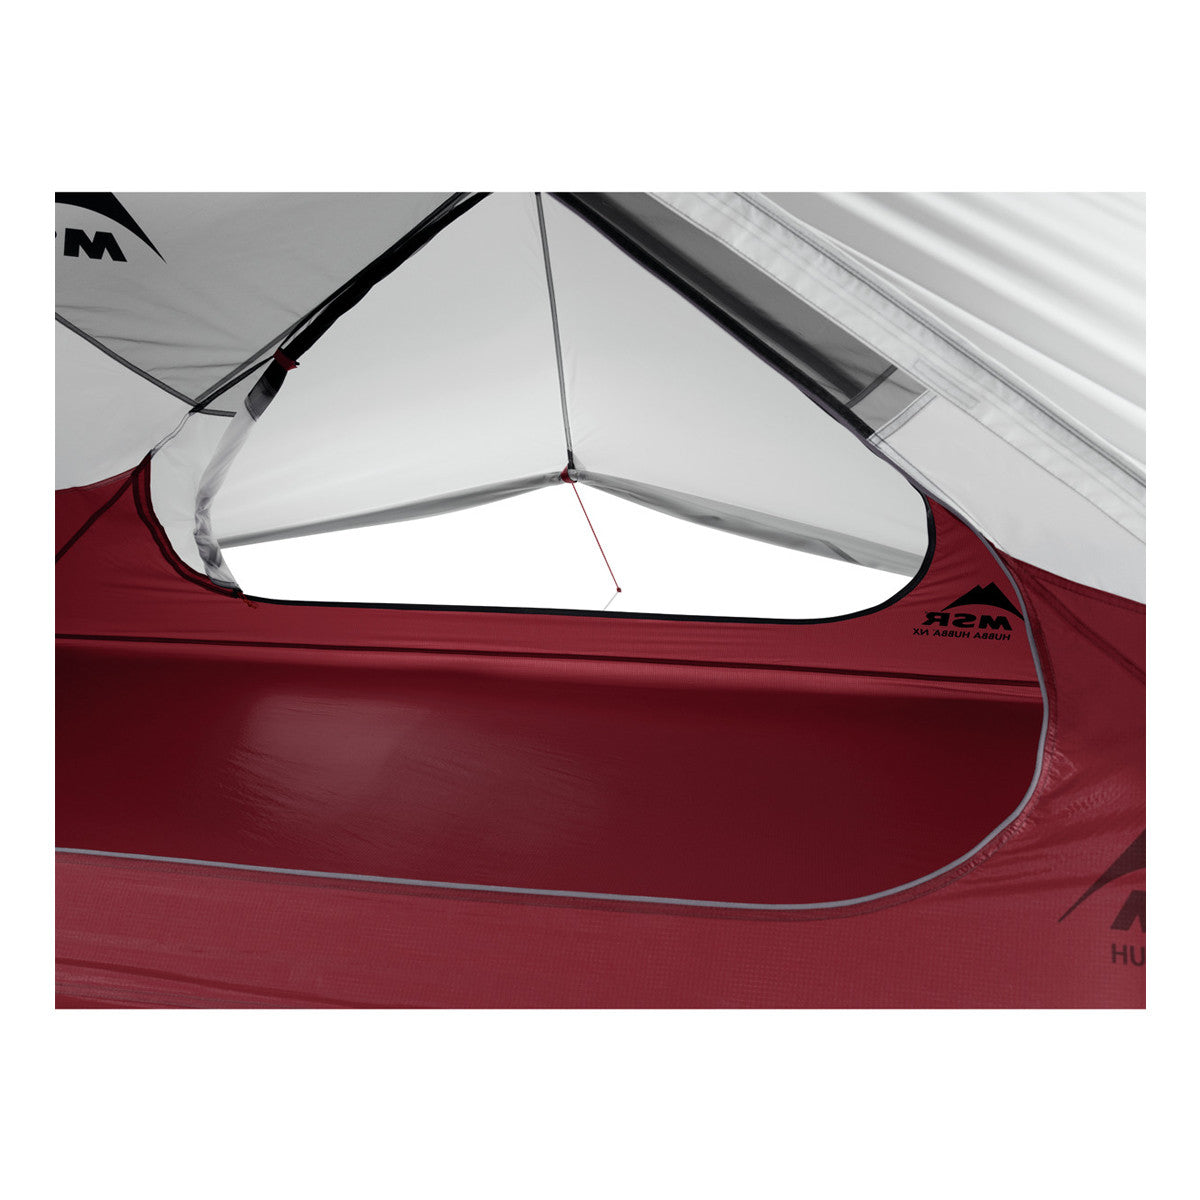 MSR Hubba Hubba NX 2 Person Tent (2021 Model) in MSR Hubba Hubba NX 2 Person Tent - goHUNT Shop by GOHUNT | MSR - GOHUNT Shop